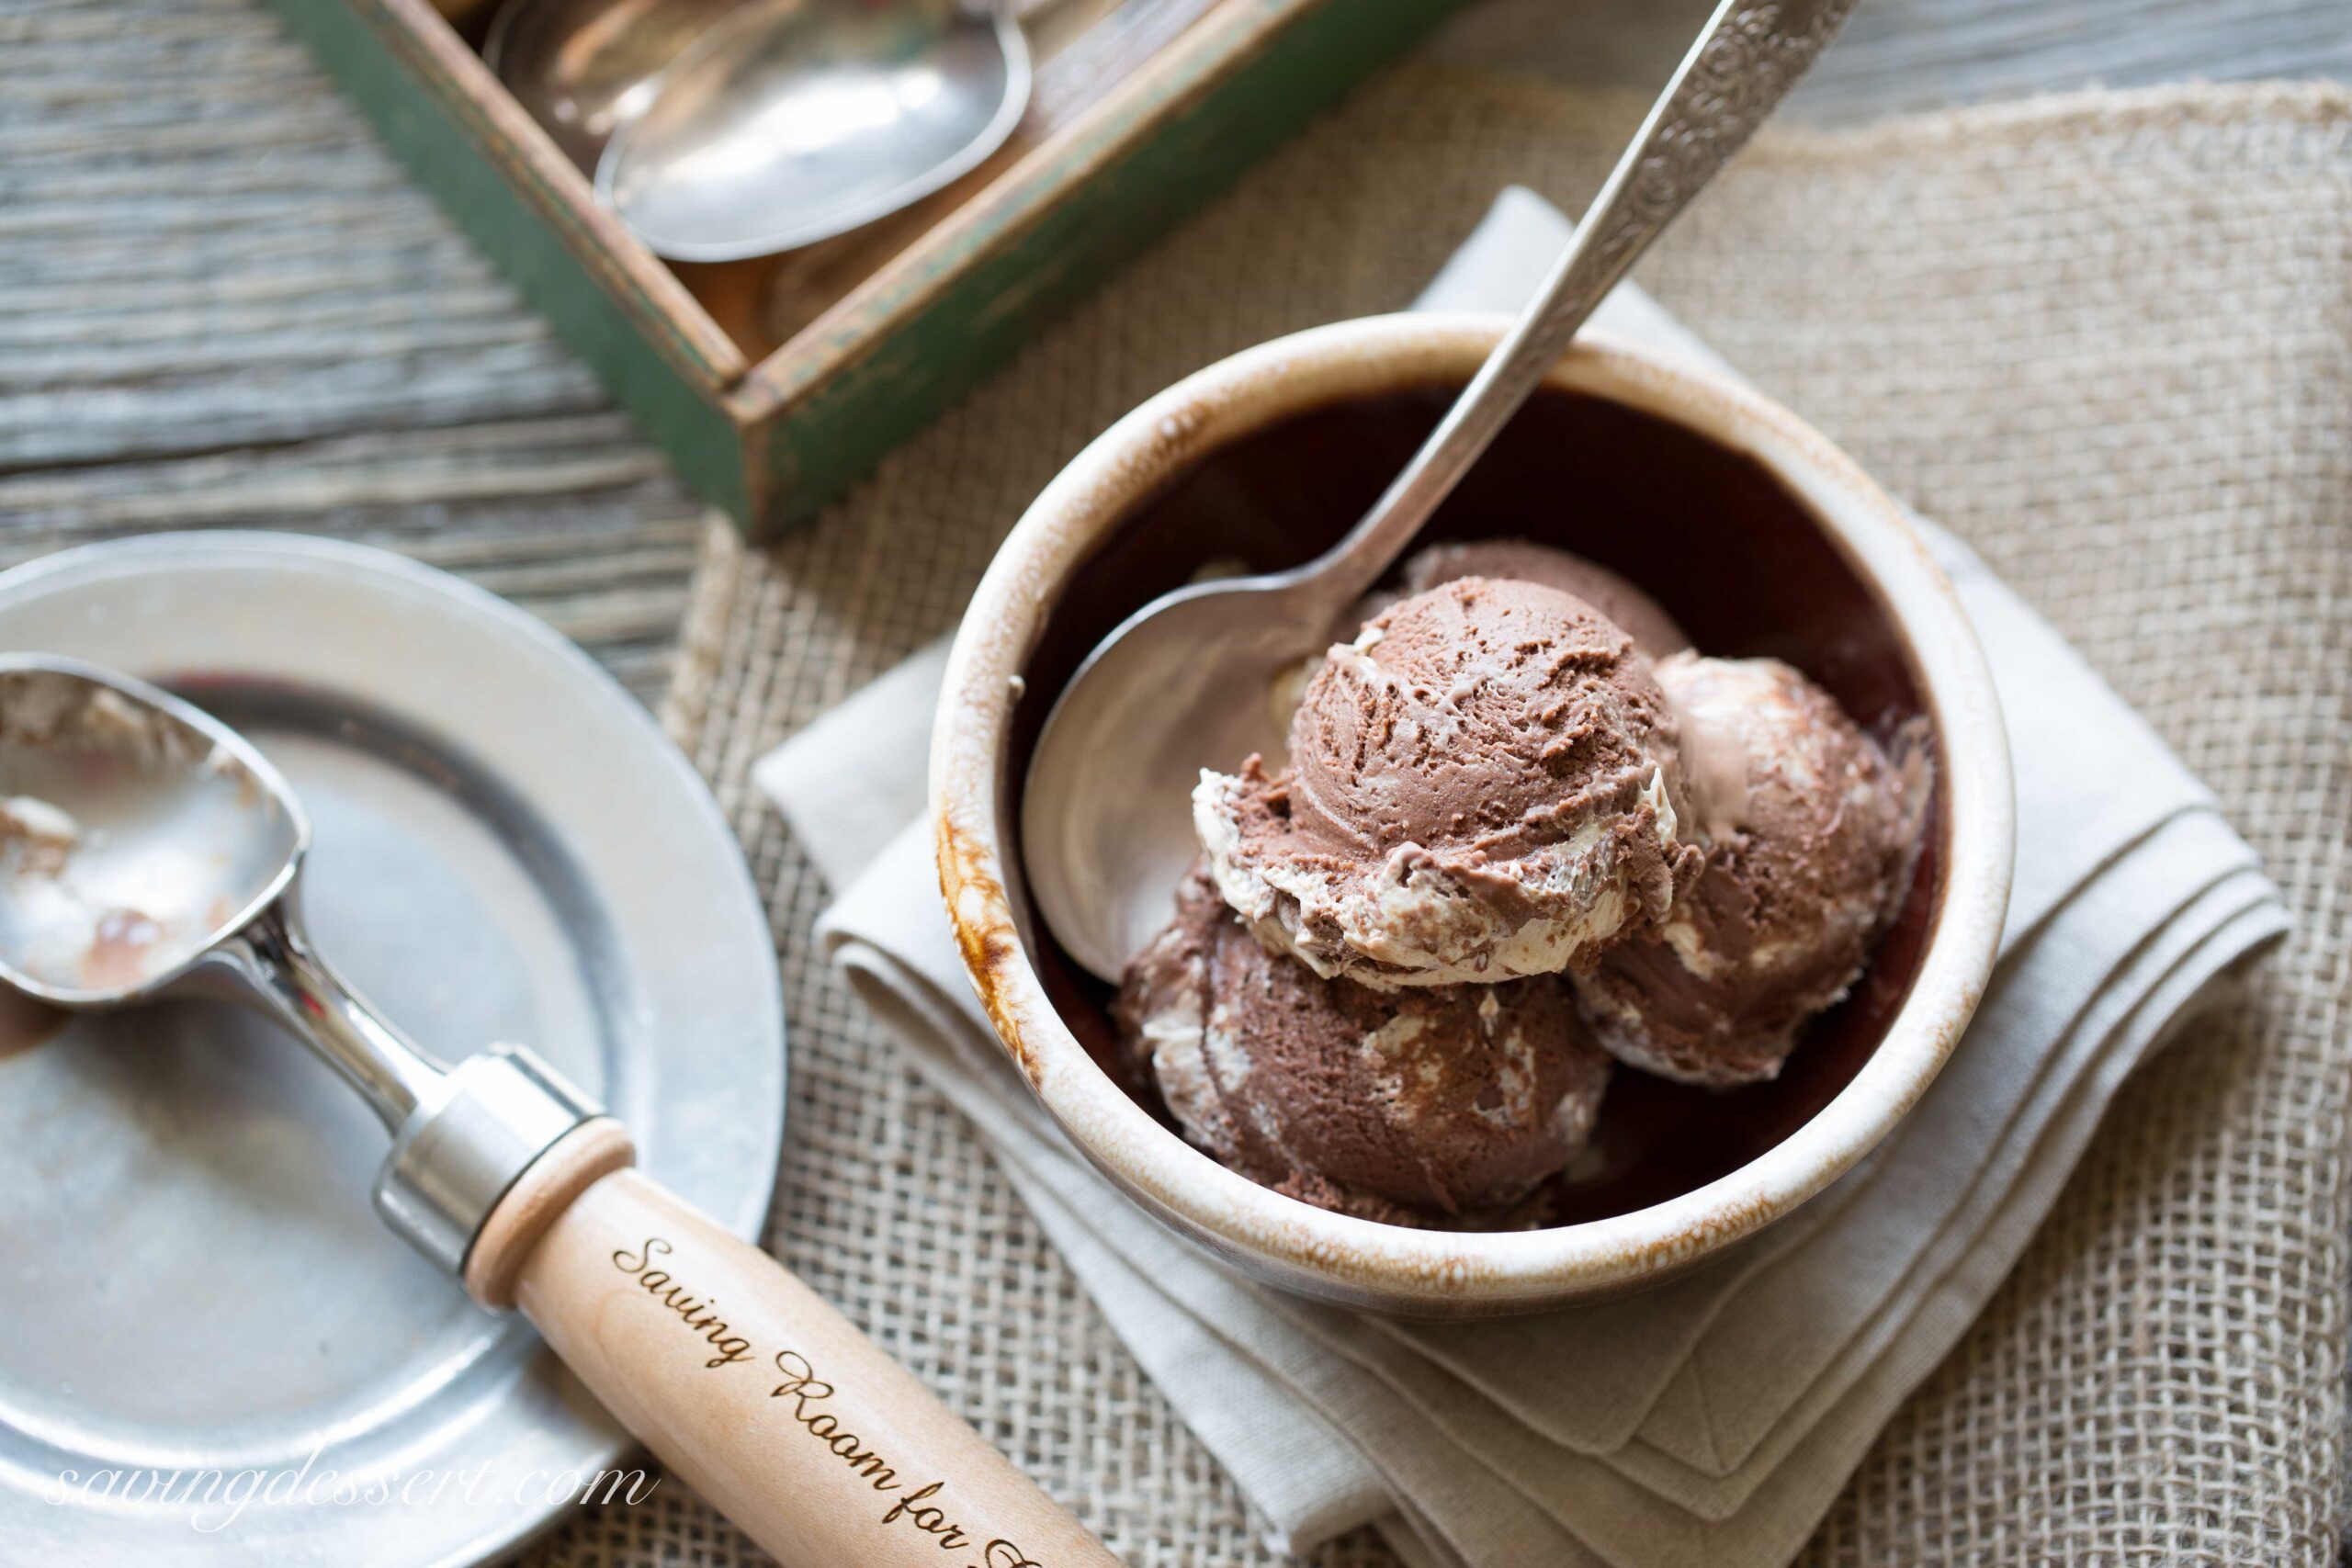 https://www.savingdessert.com/wp-content/uploads/2015/03/Chocolate-Fluffernutter-Ice-Cream-8-scaled.jpg